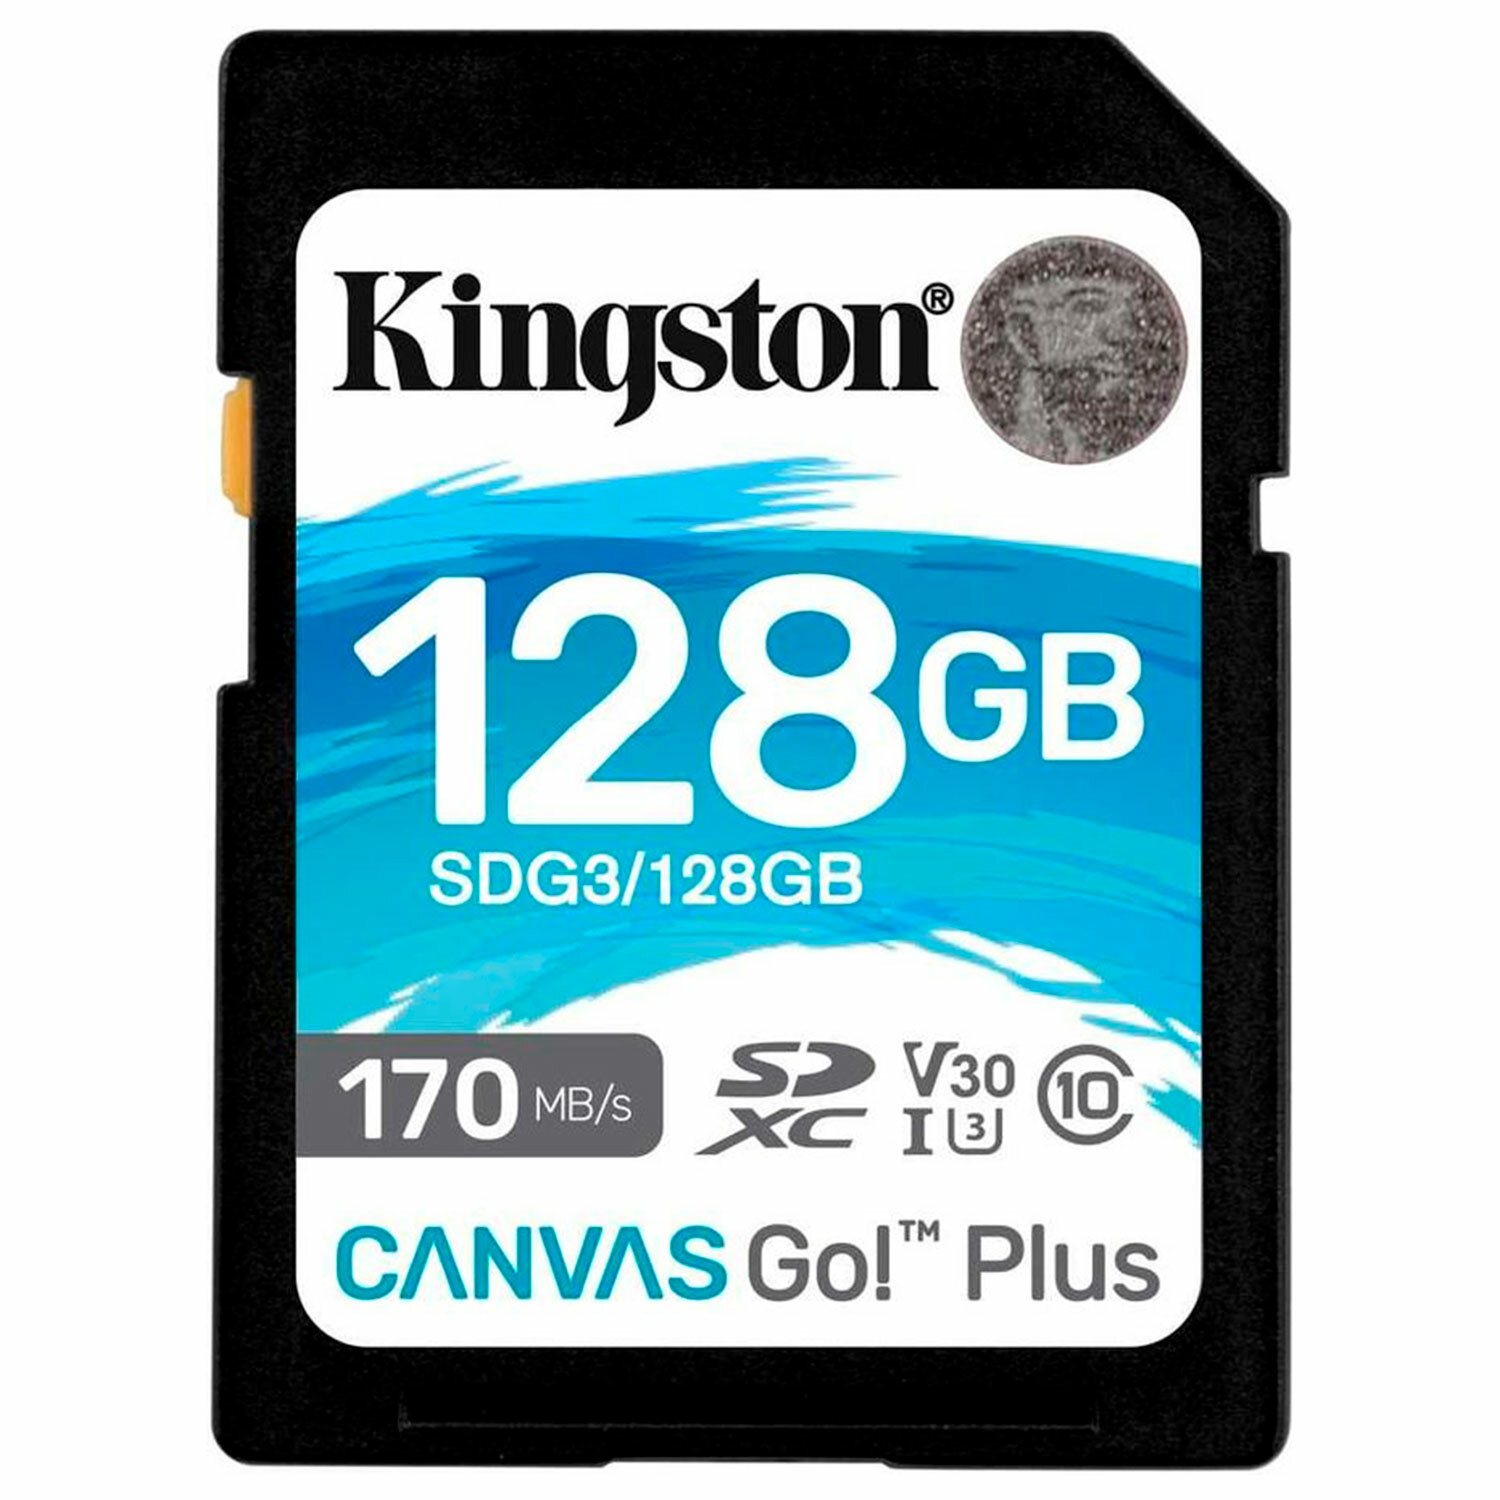  KINGSTON SDG3/128GB